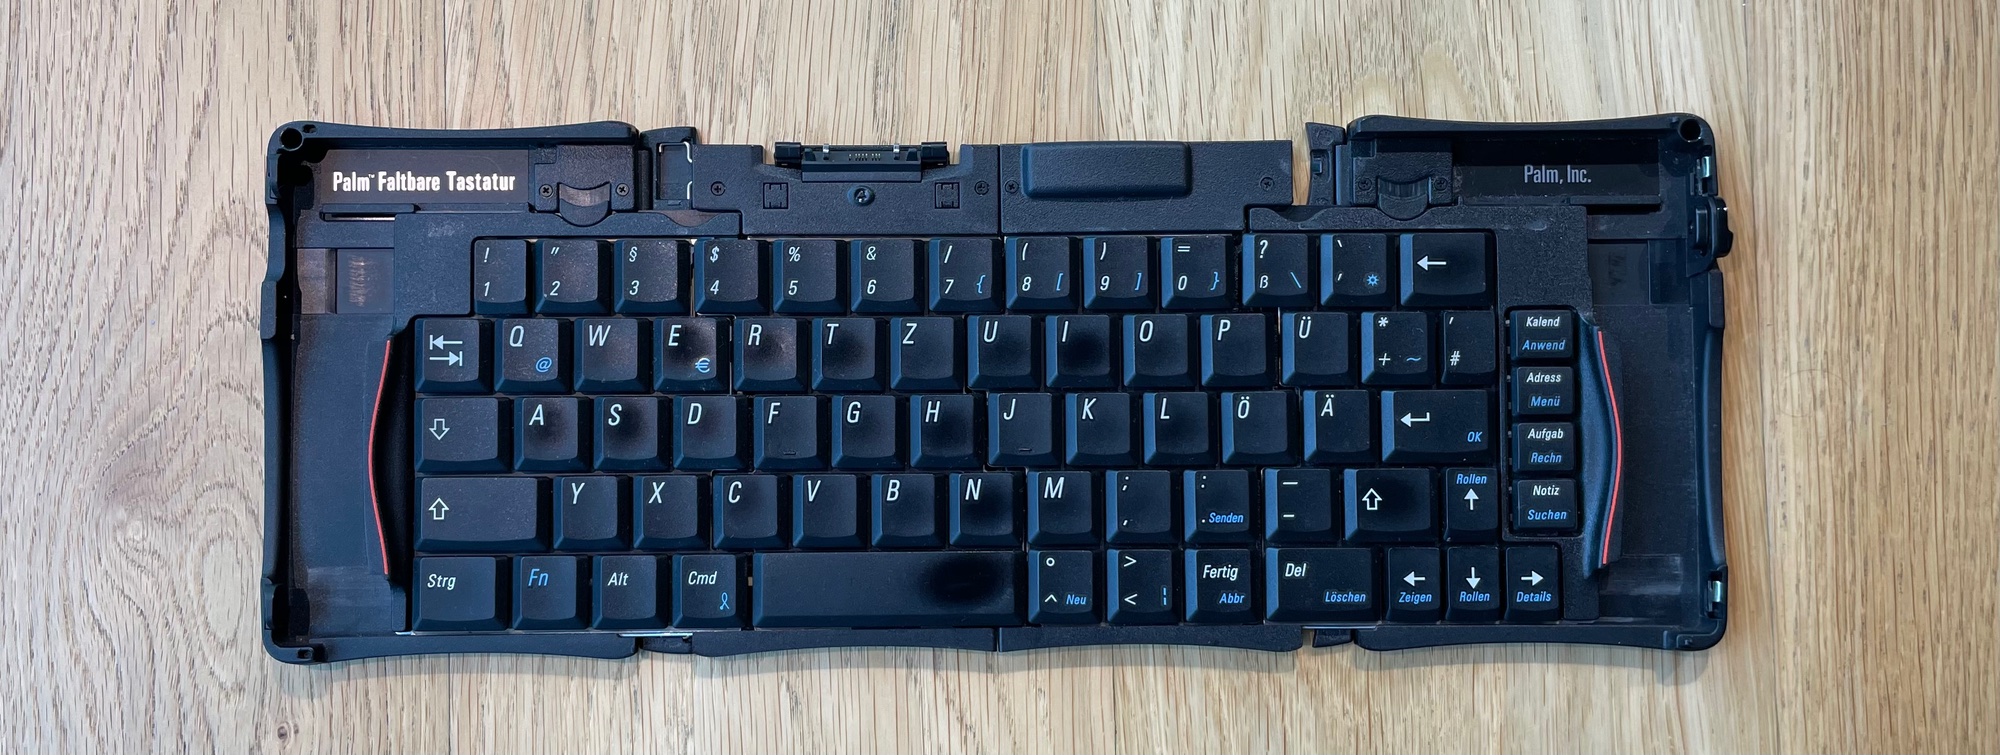 The Stowaway keyboard